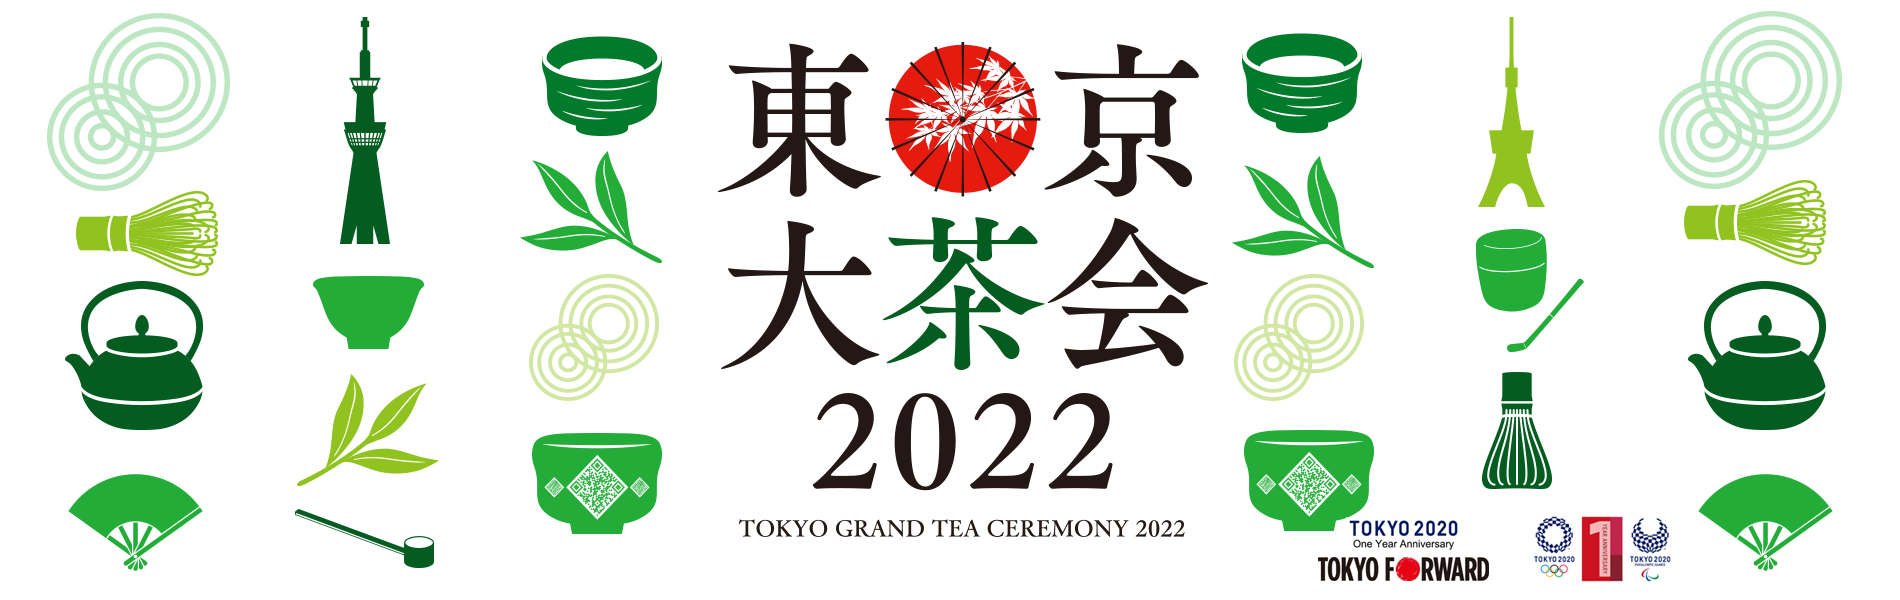 Tokyo Grand Tea Ceremony 2022